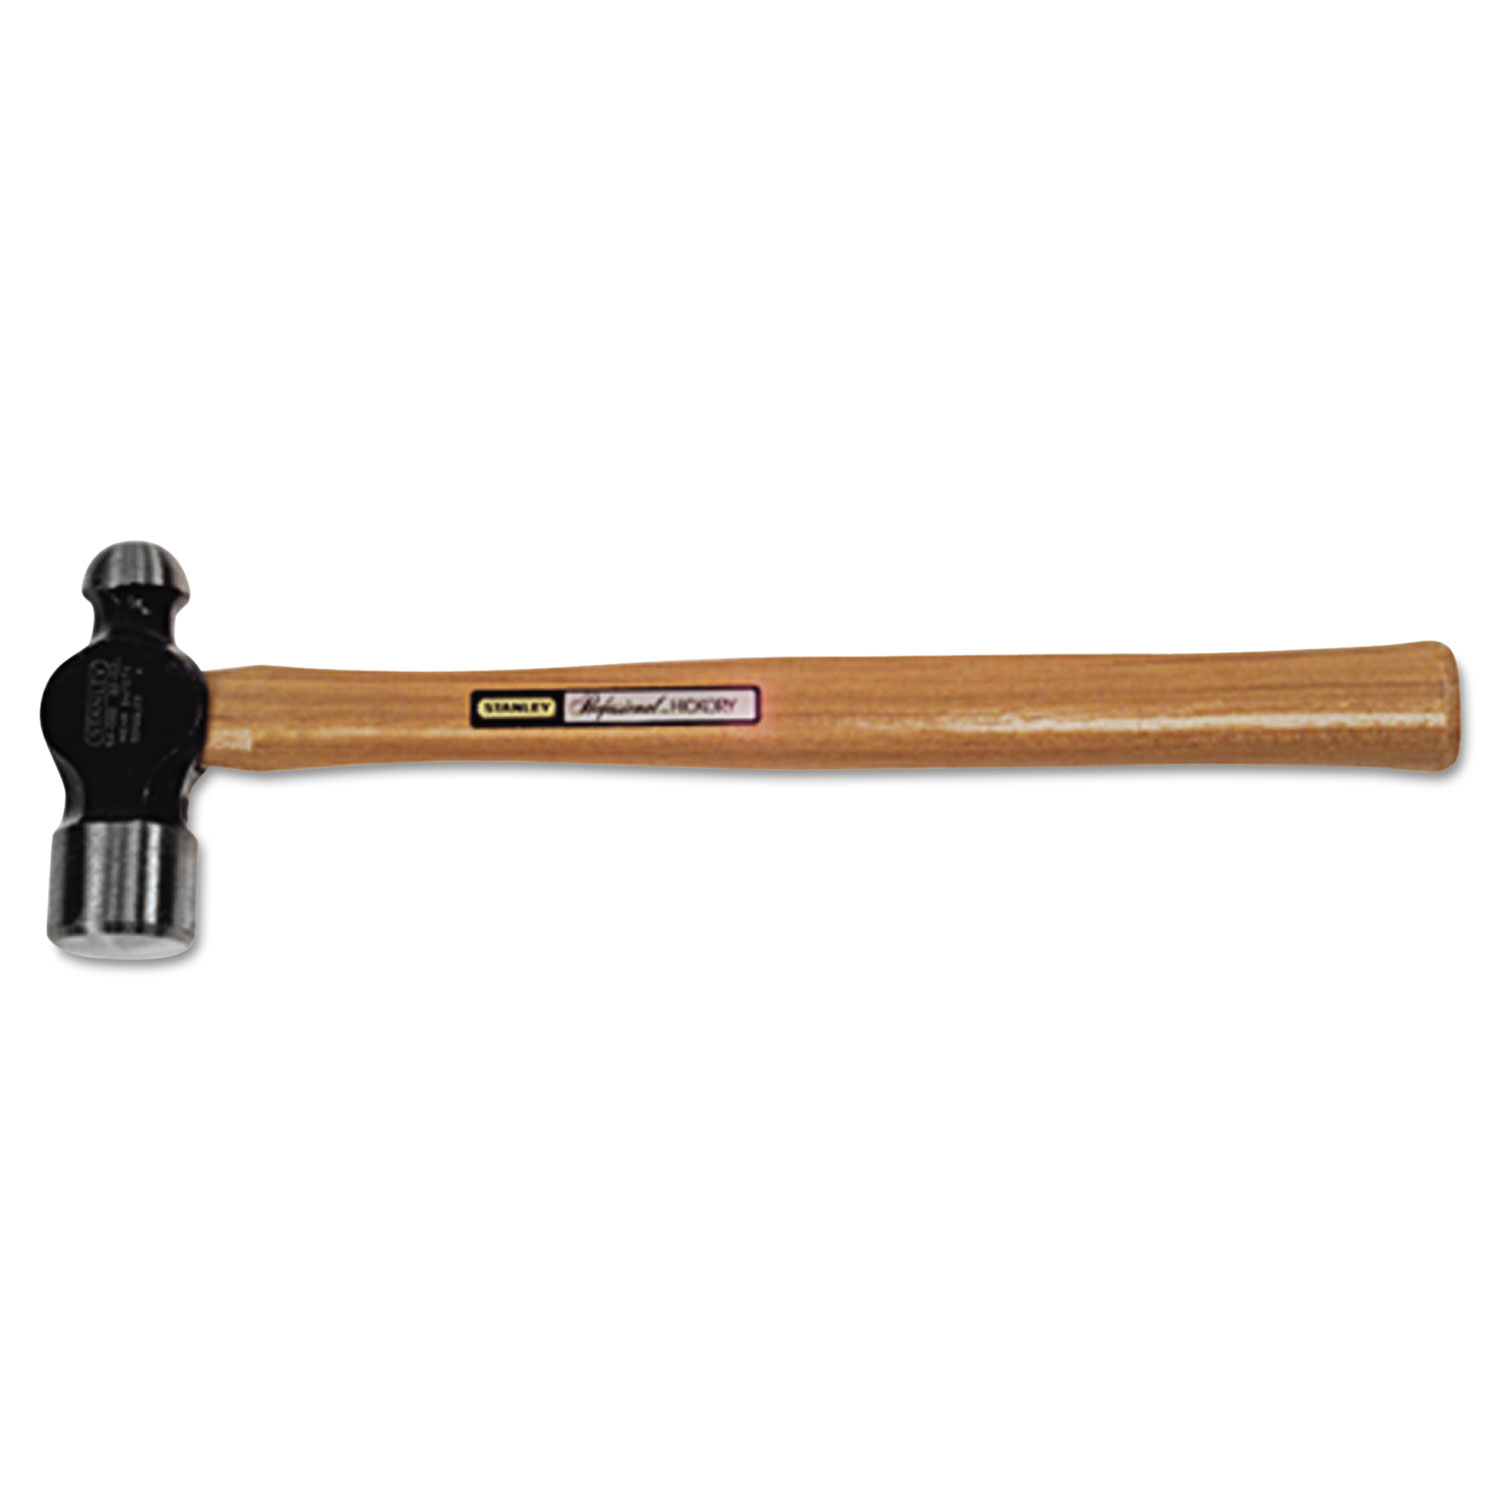 Ball-Pein Hammer, 12oz, Wood Handle